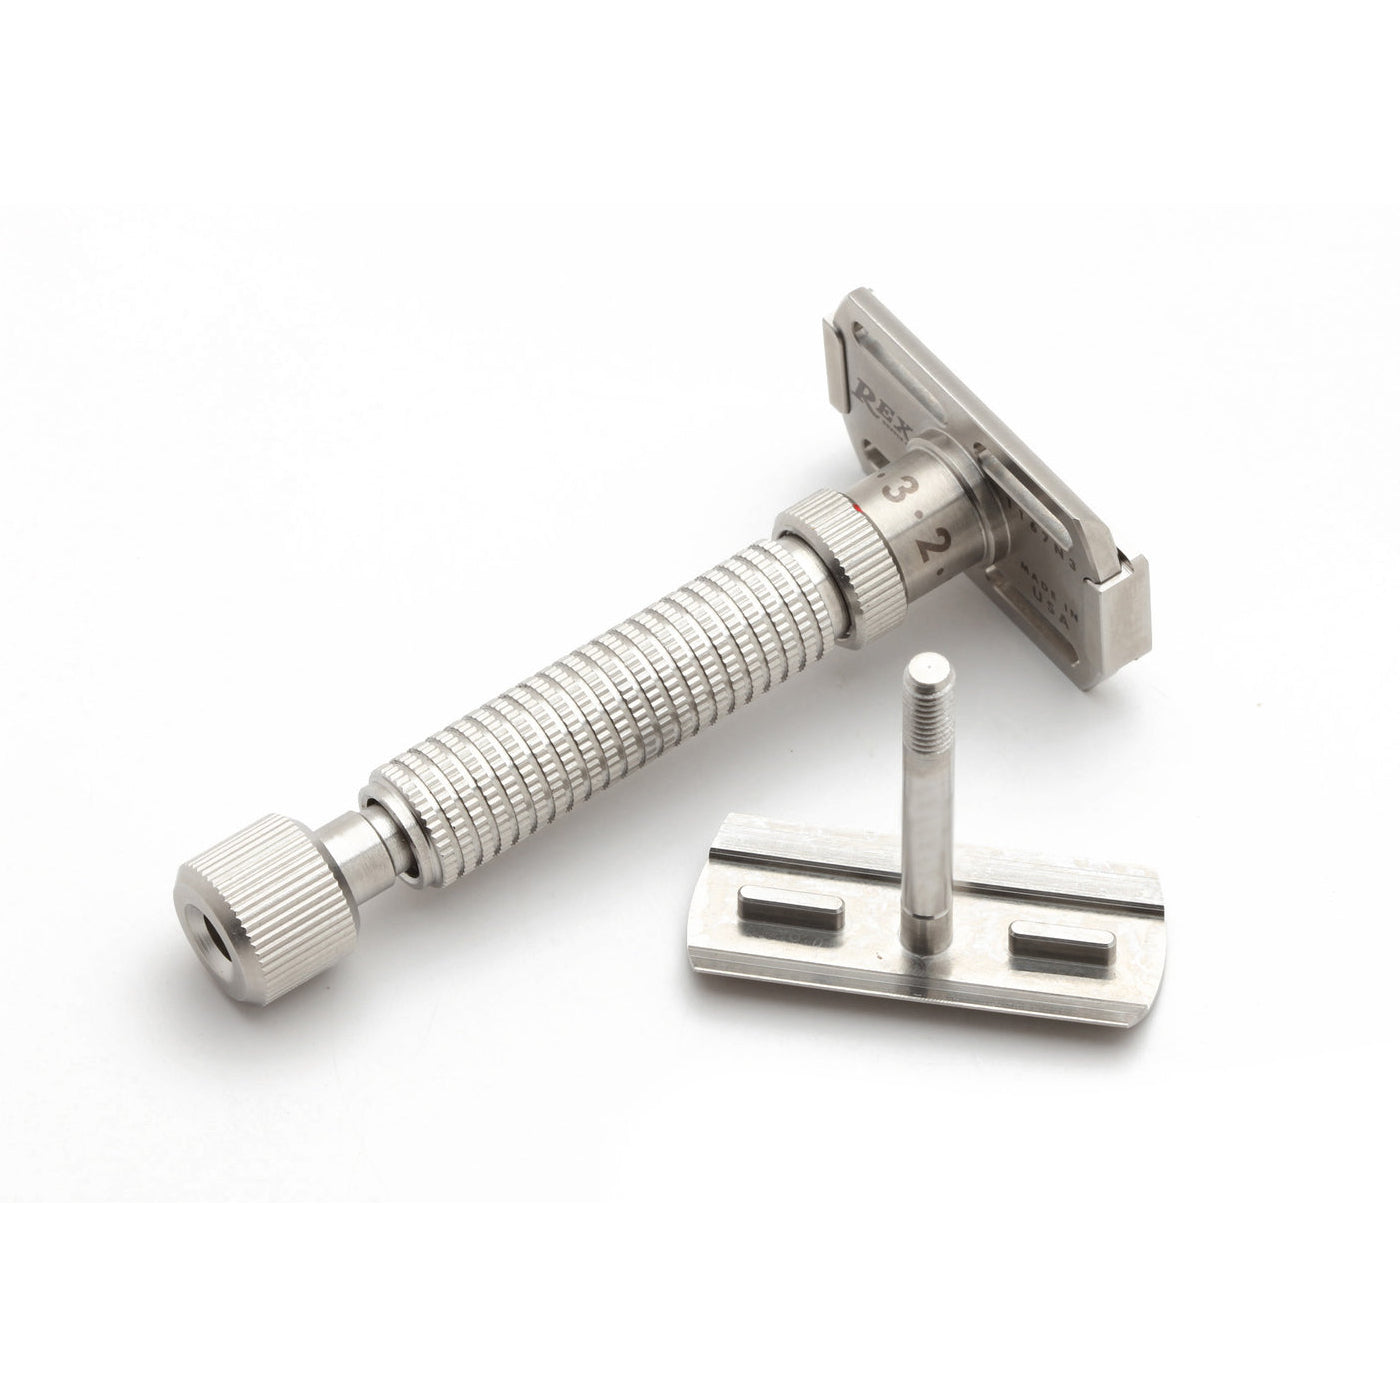 rex supply co ambassador stainless steel adjustable double edge safety razor